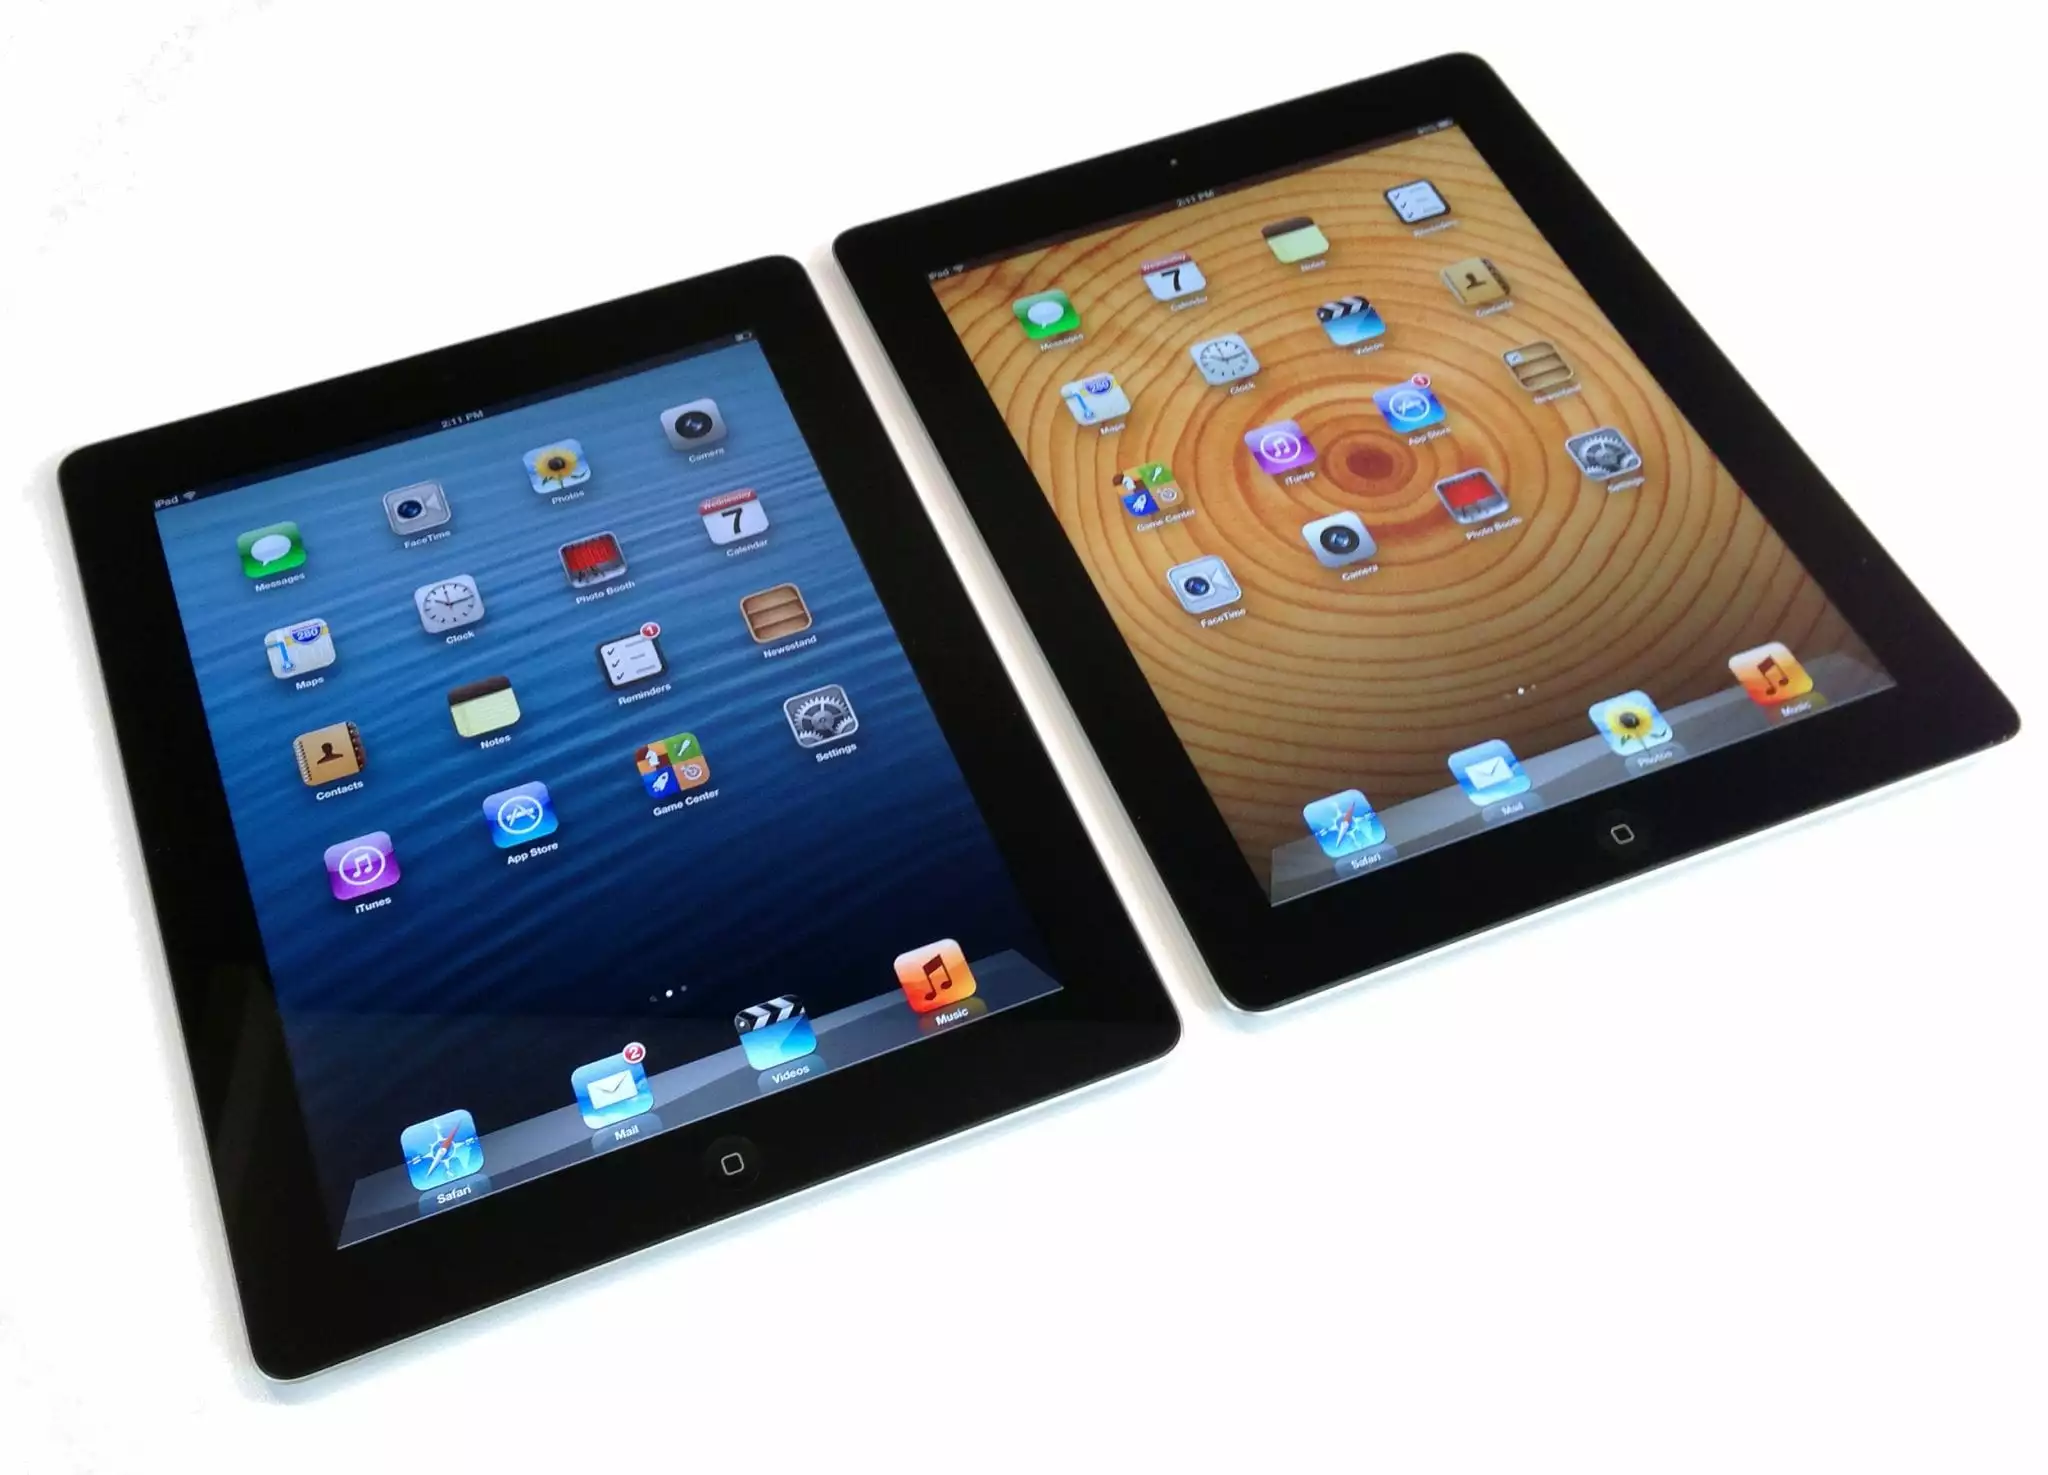 Apple iPad 4th Generation Specs